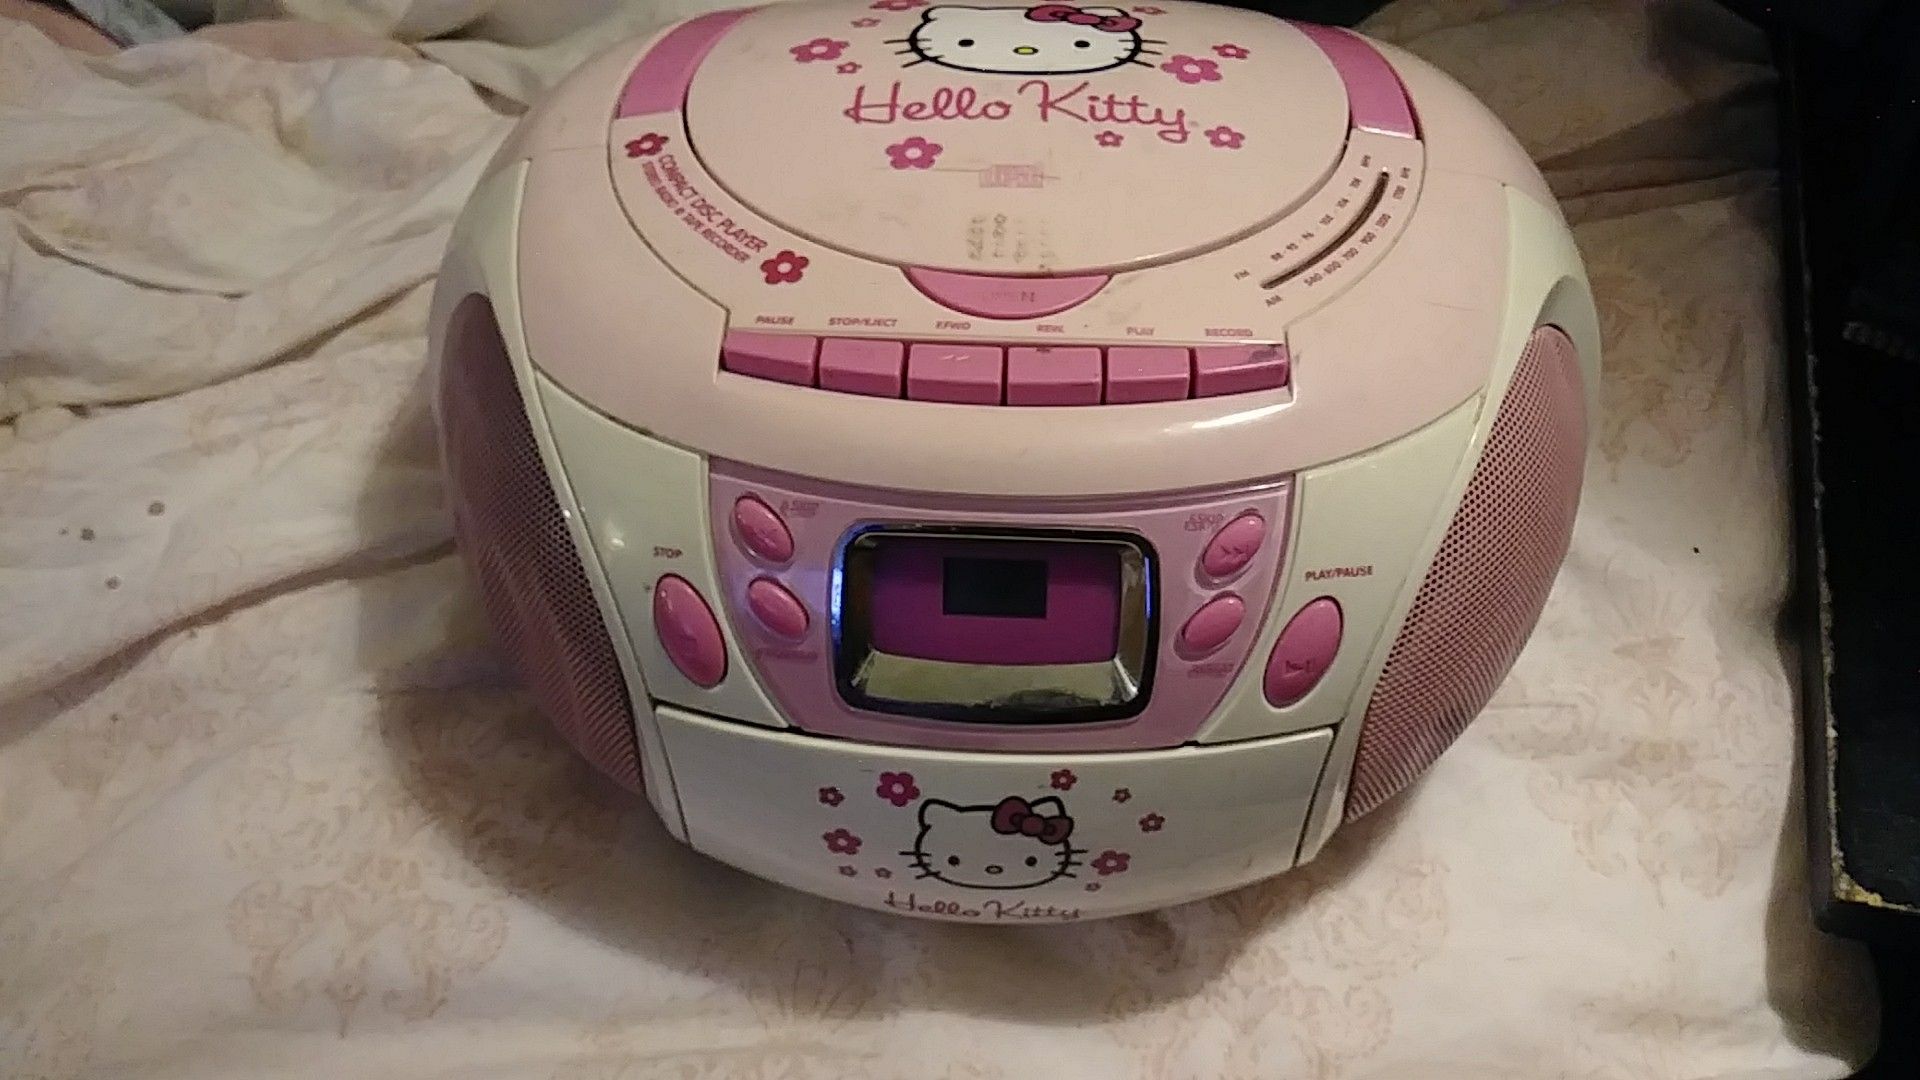 Hello kitty CD player/ radio